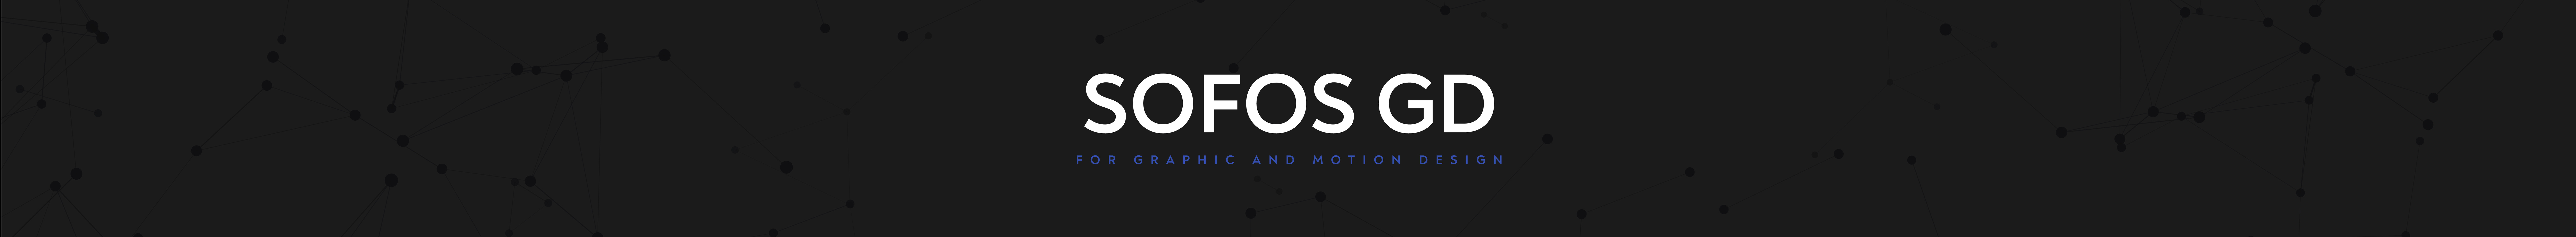 SOFOS GD's profile banner